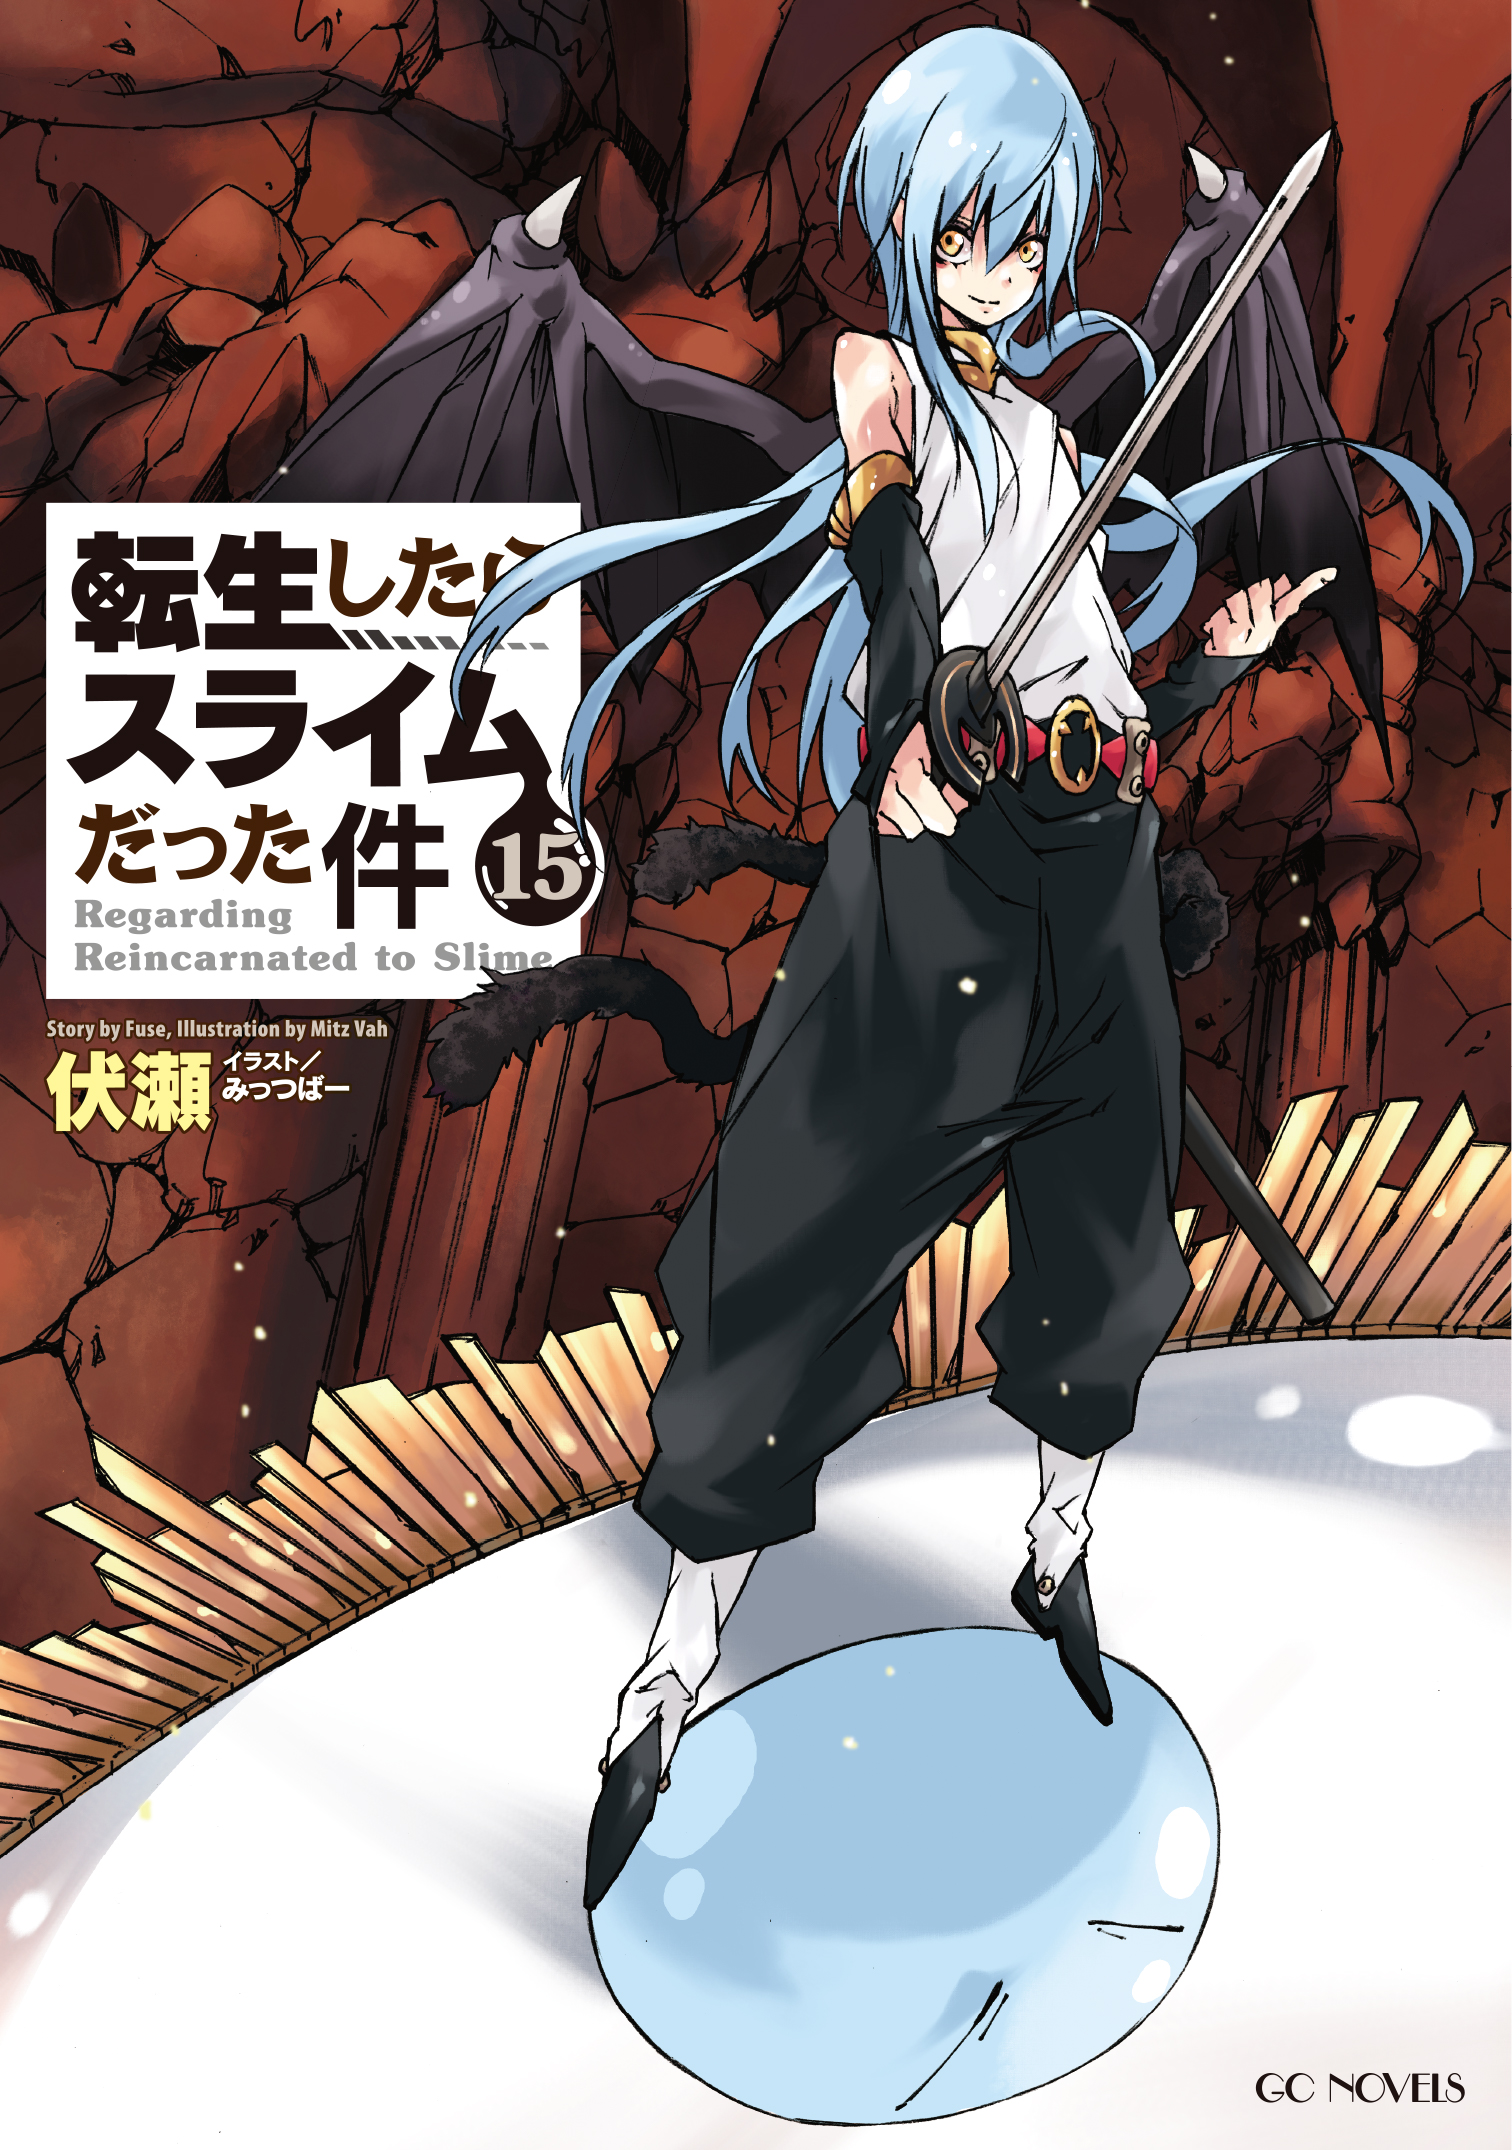 Illustration Tensei Shitara Slime Datta Ken Volume 19. One Of The